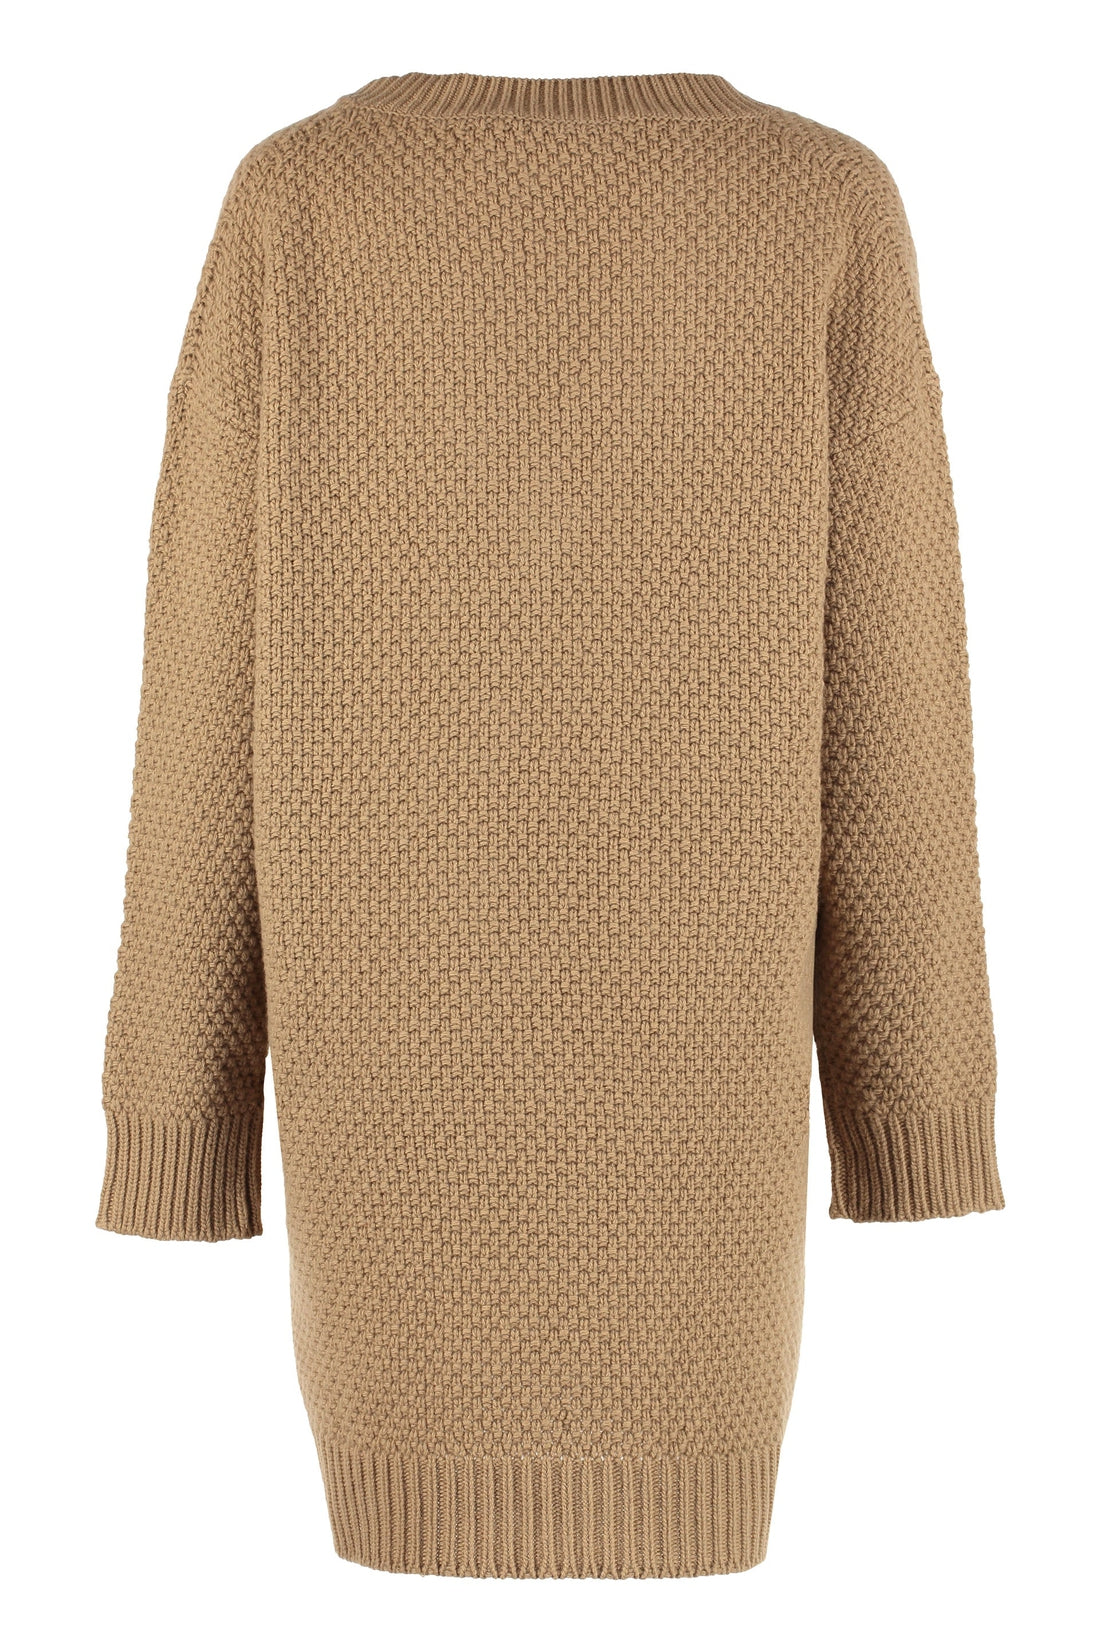 Weekend Max Mara-OUTLET-SALE-Alfeo oversize virgin wool sweater-ARCHIVIST